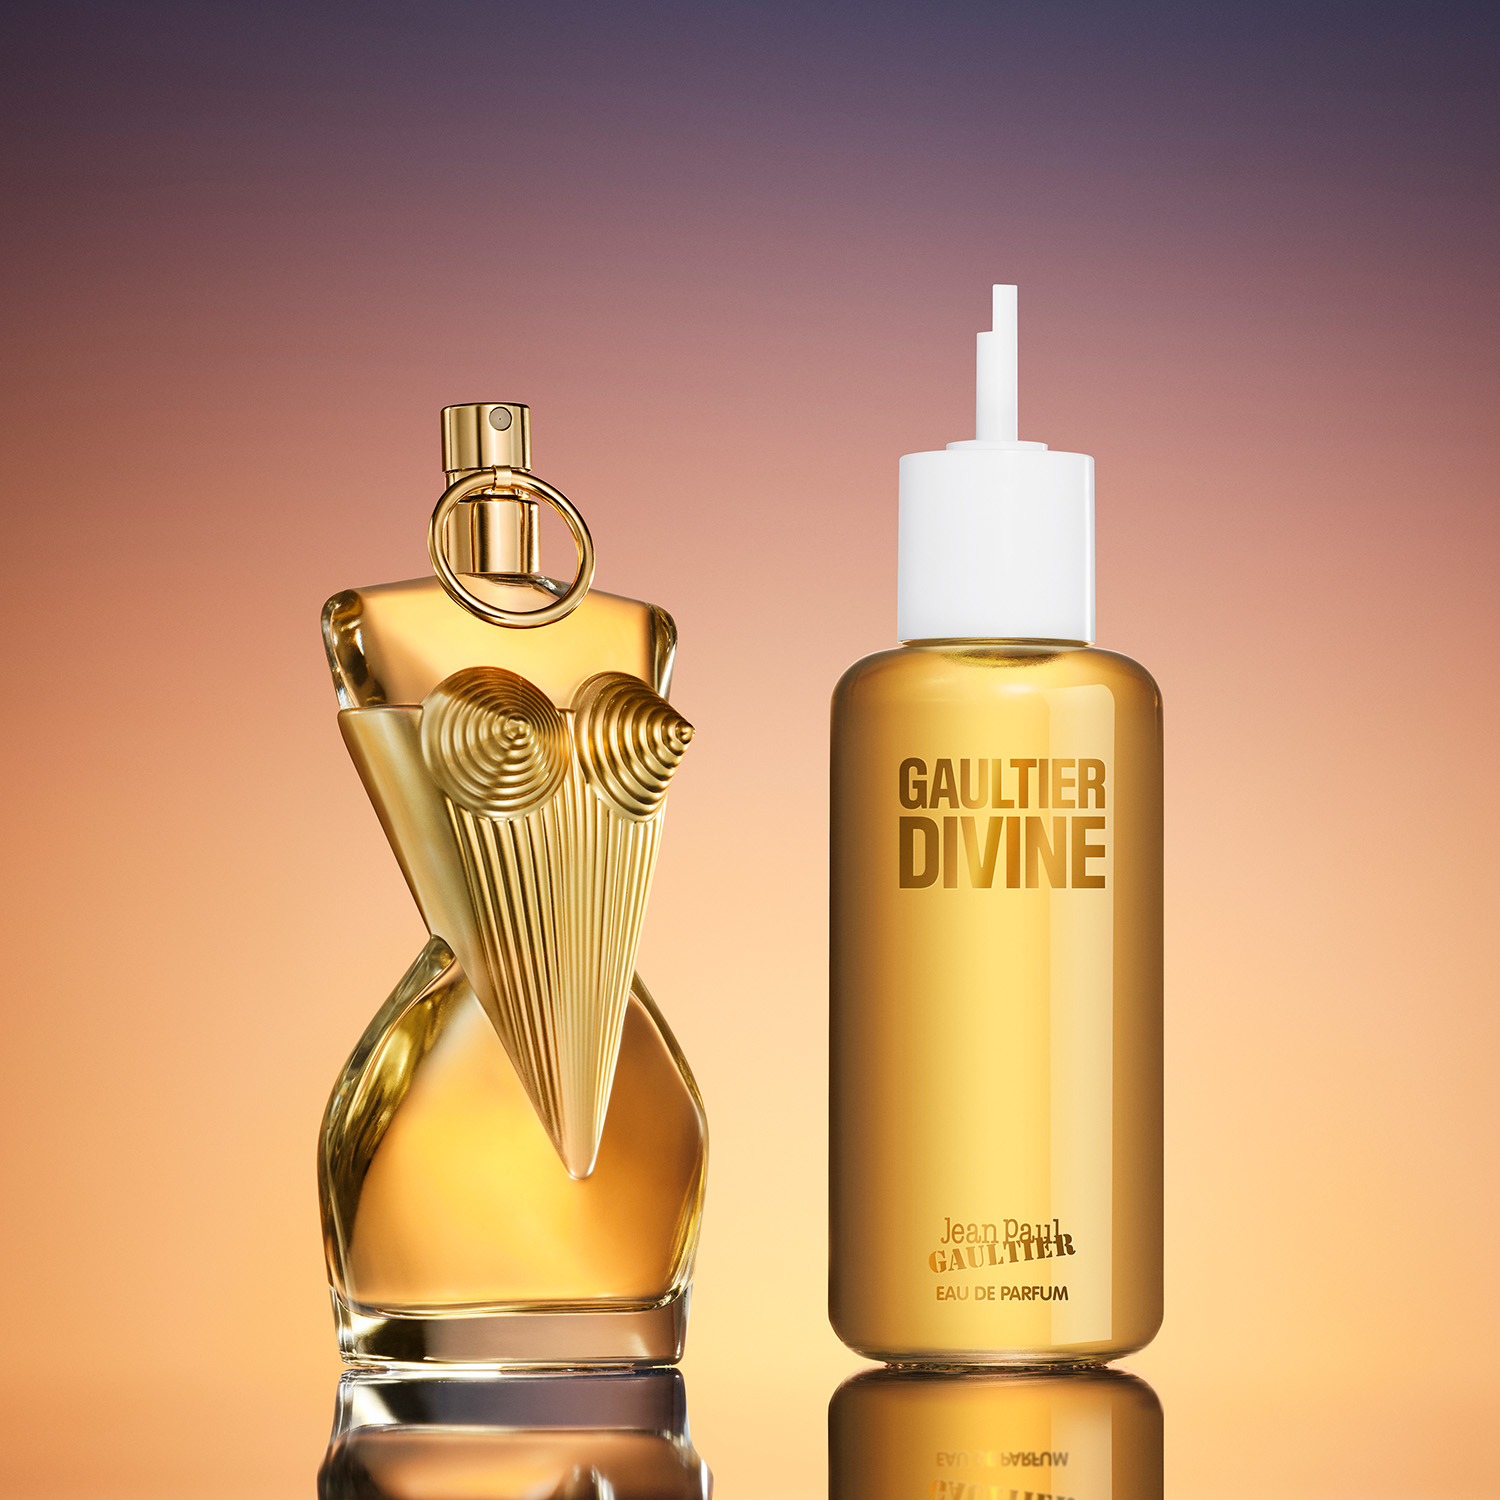 Jean Paul Gaultier Gaultier Divine Eau de Parfum 200ml Refiller